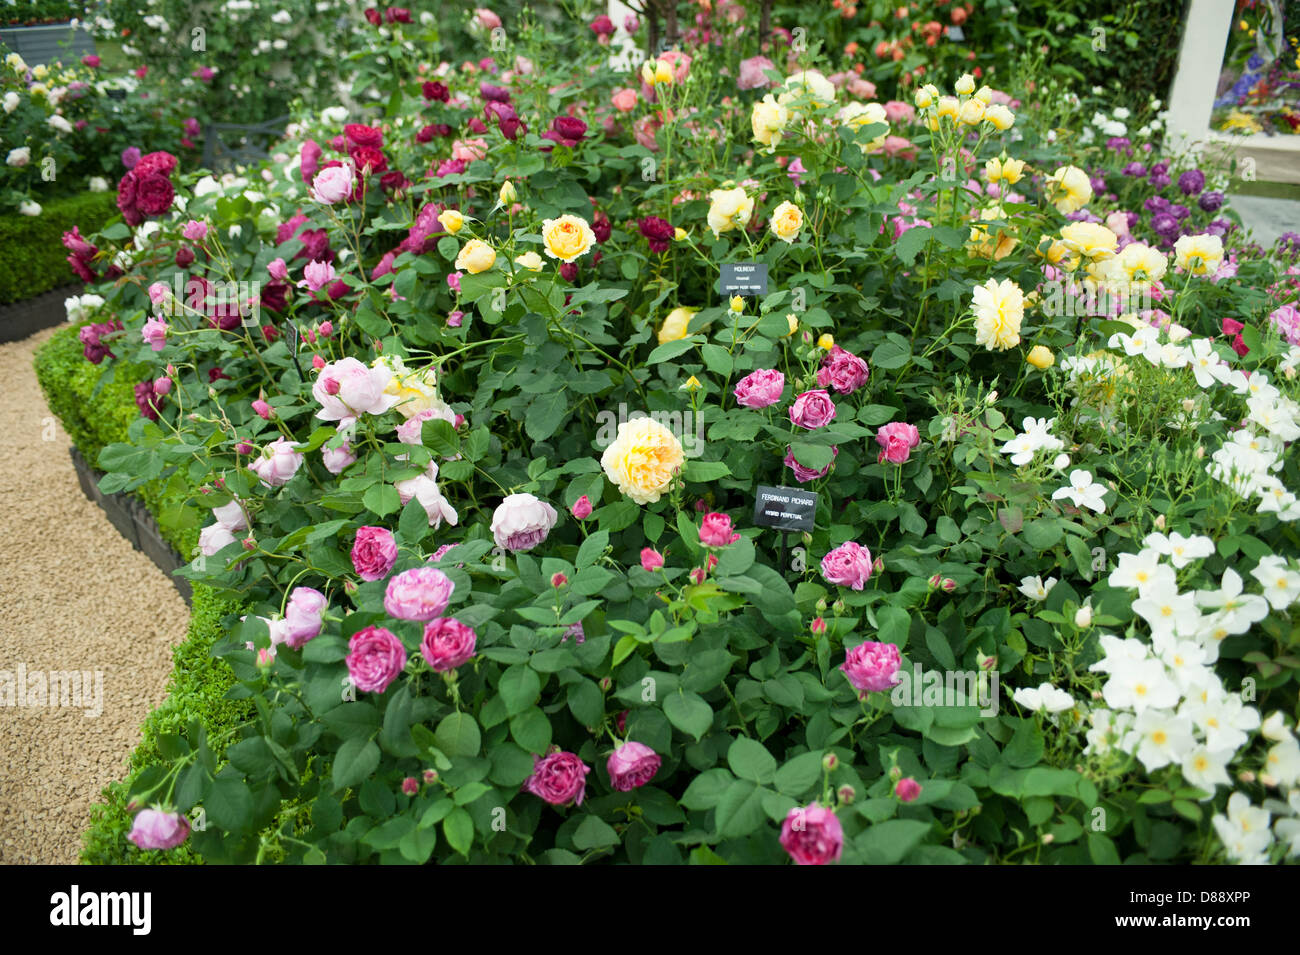 London, UK. 20. Mai 2013. Rosengarten im großen Pavillon bei der RHS Chelsea Flower Show. Bildnachweis: Malcolm Park / Alamy Live News Stockfoto